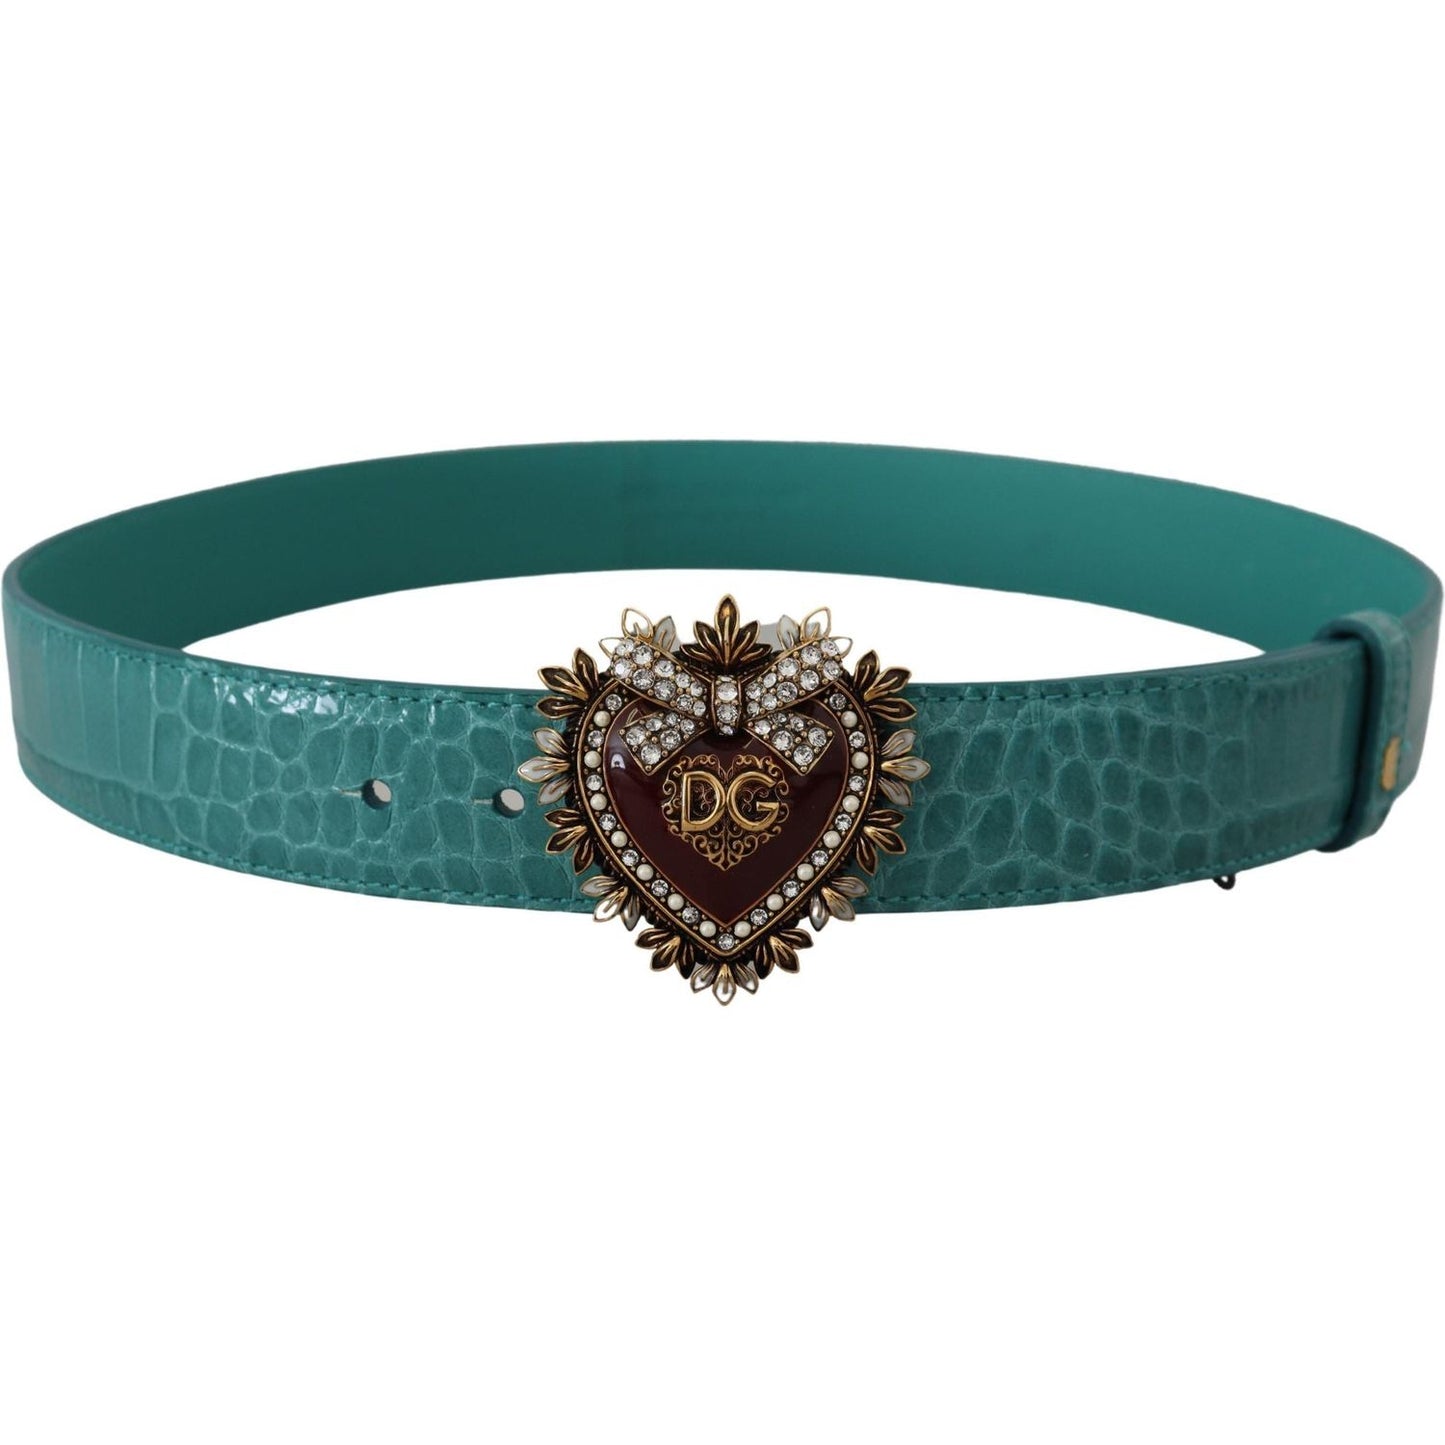 Dolce & Gabbana Elegant Blue Leather Belt with Gold Buckle blue-leather-gold-devotion-heart-buckle-belt-1